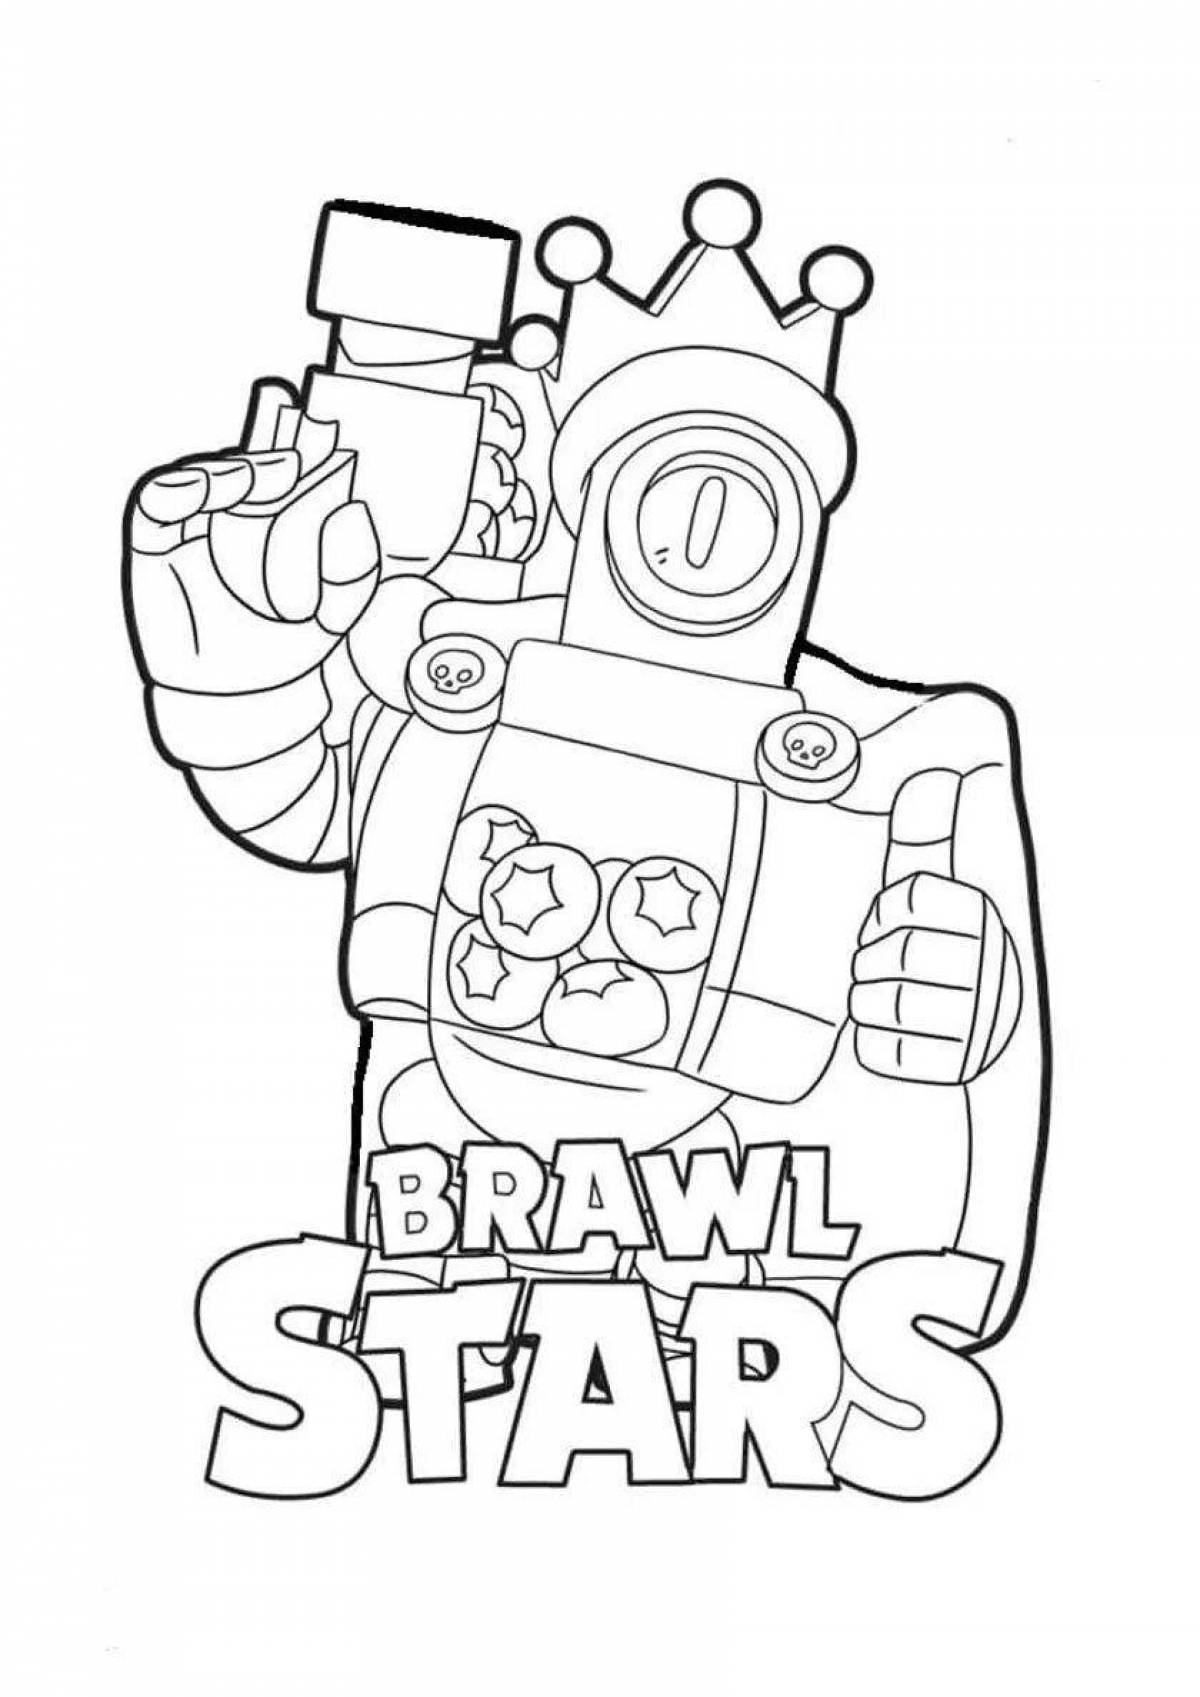 Brawler icon coloring page